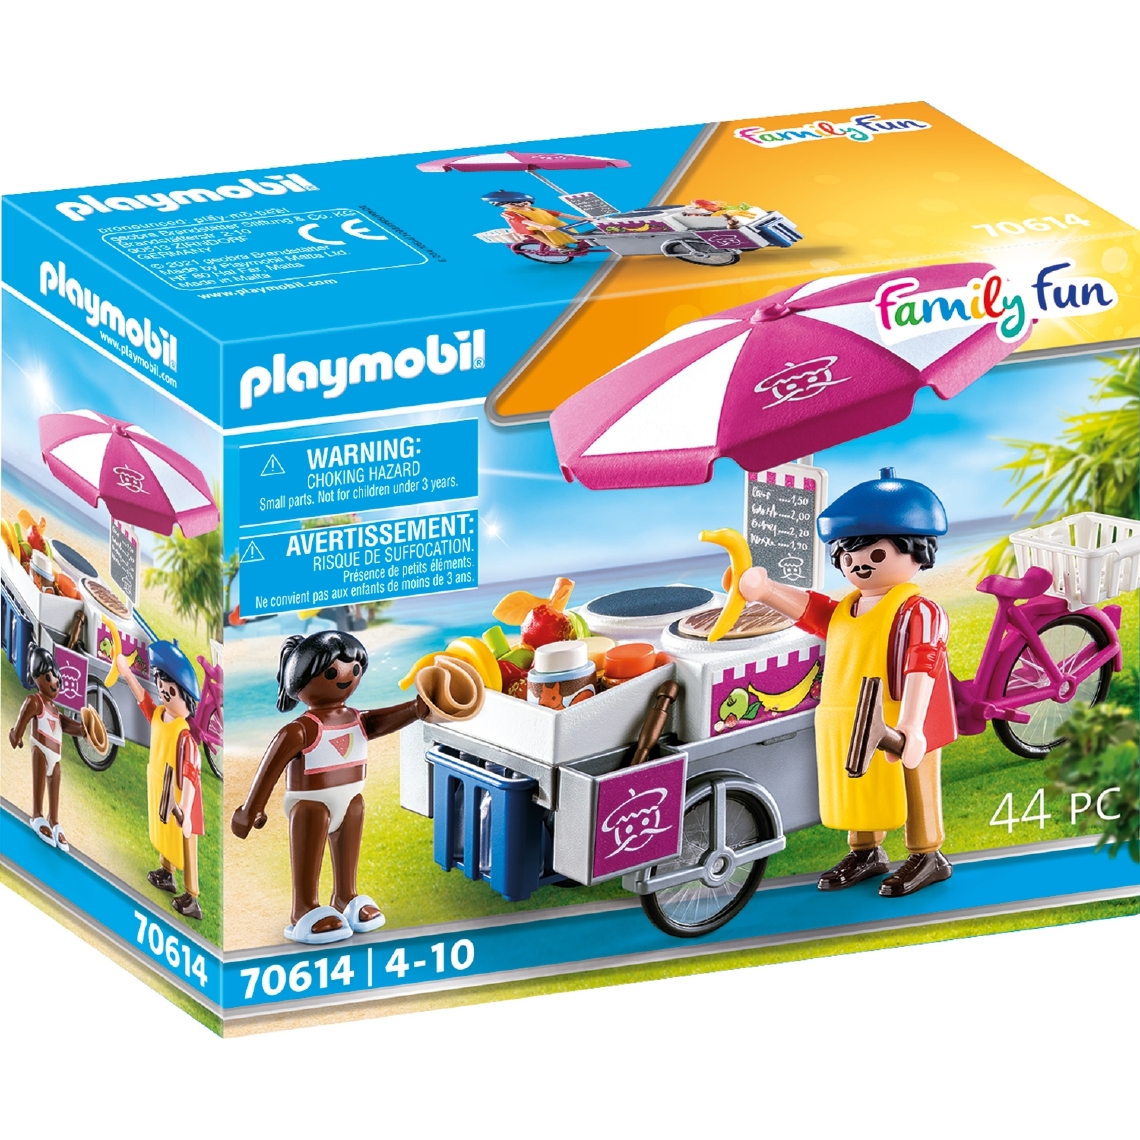 Playmobil - PLAYMOBIL 70614 - Family Fun Stand de crêpes - Playmobil